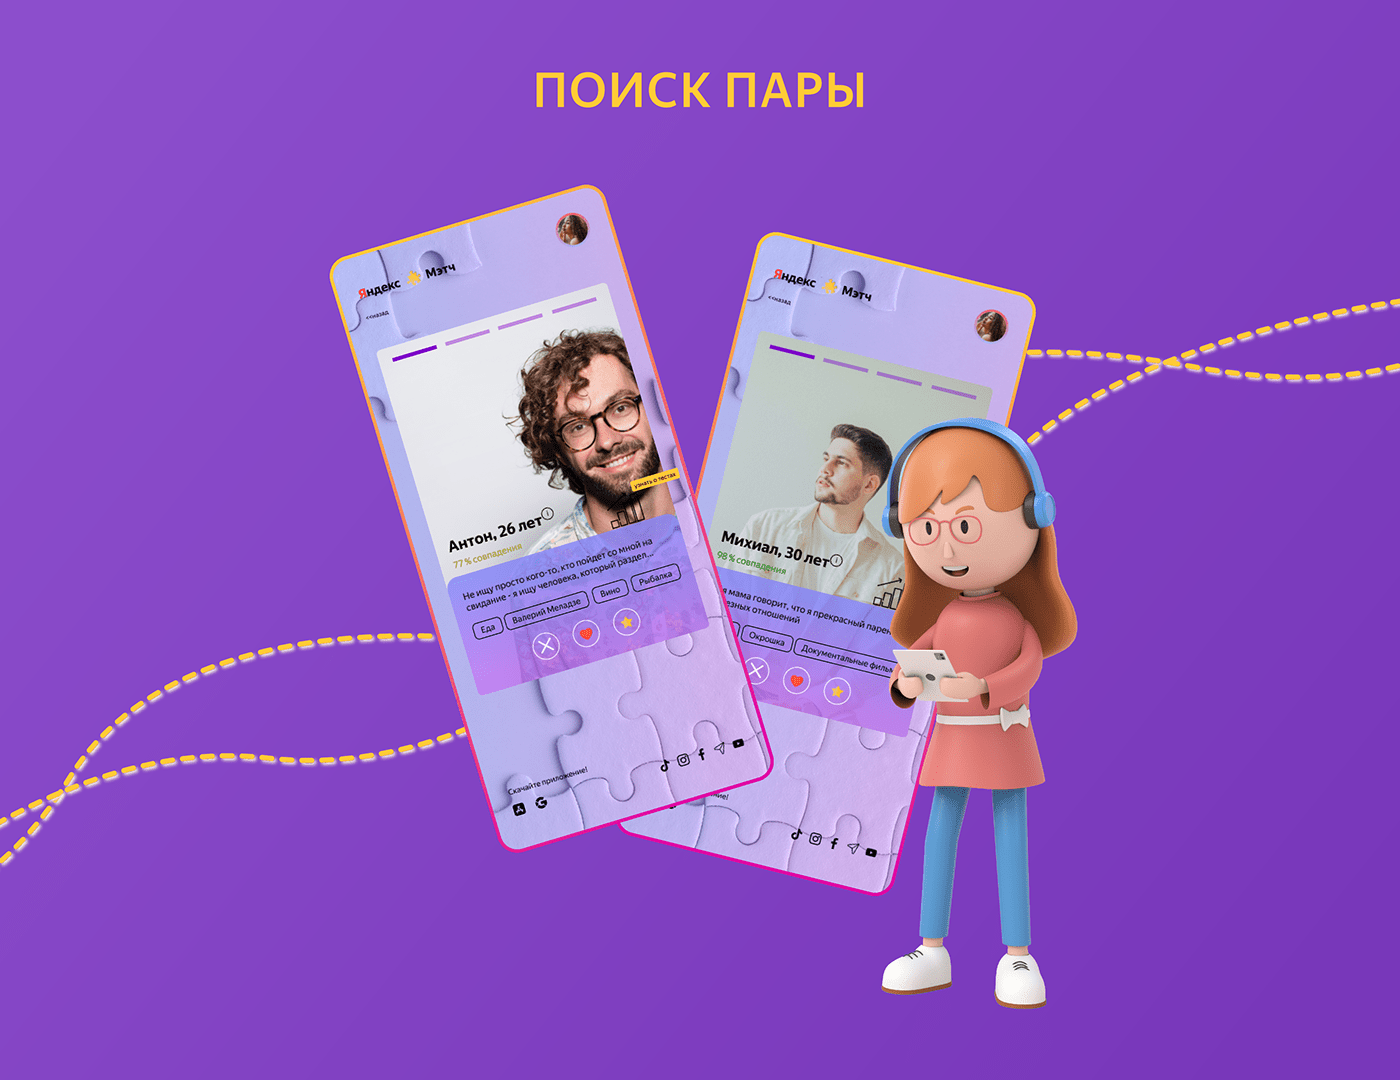 Figma ЗНАКОМСТВА Dating mobile UI/UX веб-дизайн лендинг дизайн сайта Яндекс Мэтч